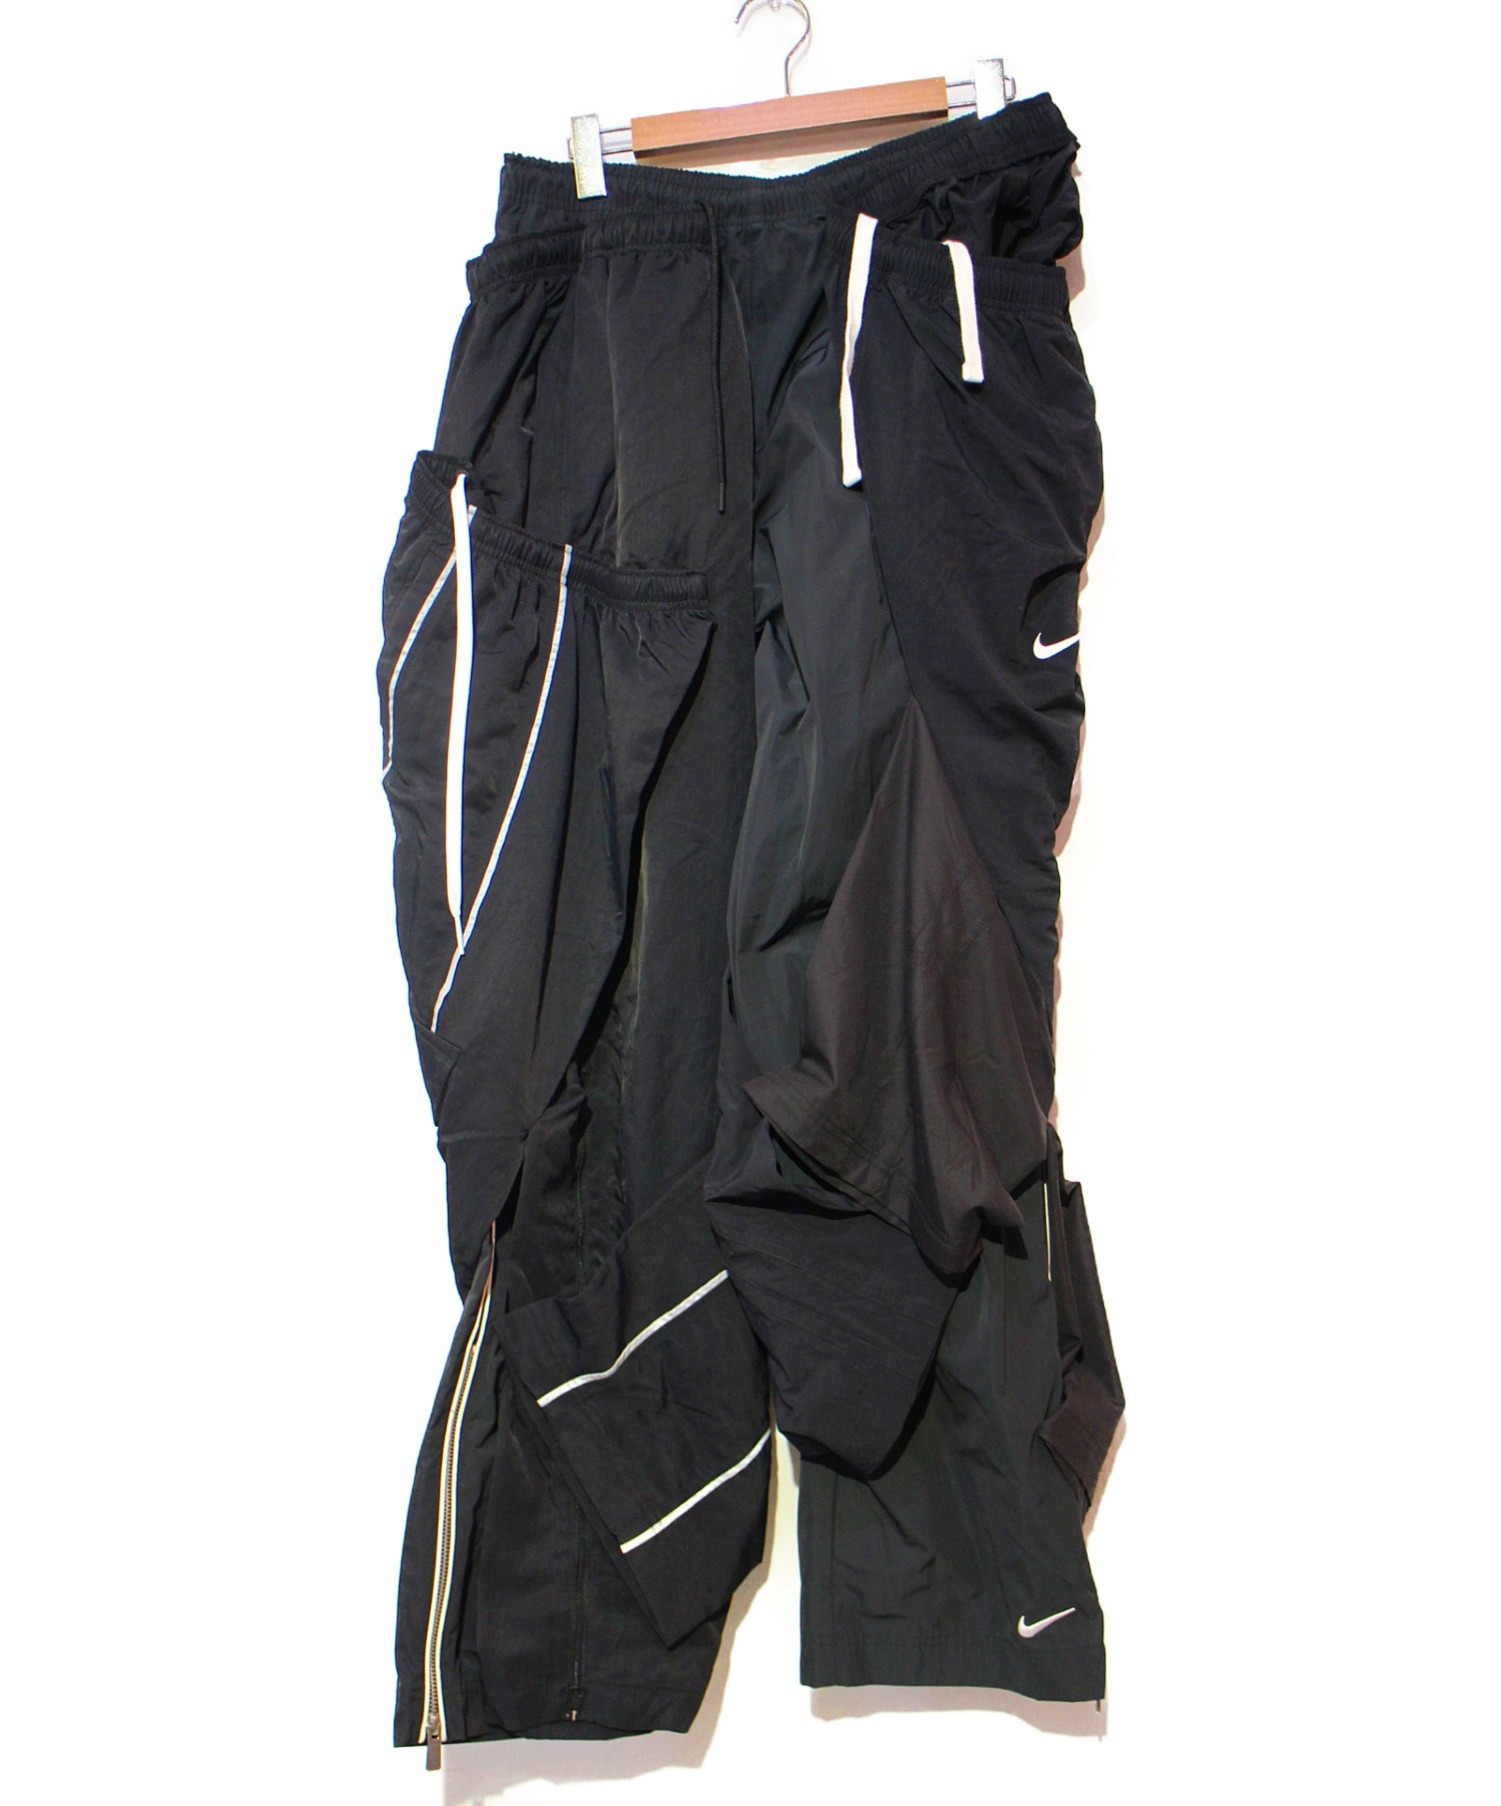 NikeLab (ナイキラボ) 再構築ナイロンパンツ ブラック サイズ:M AV8268-010 MNRG DH PANT BLACK